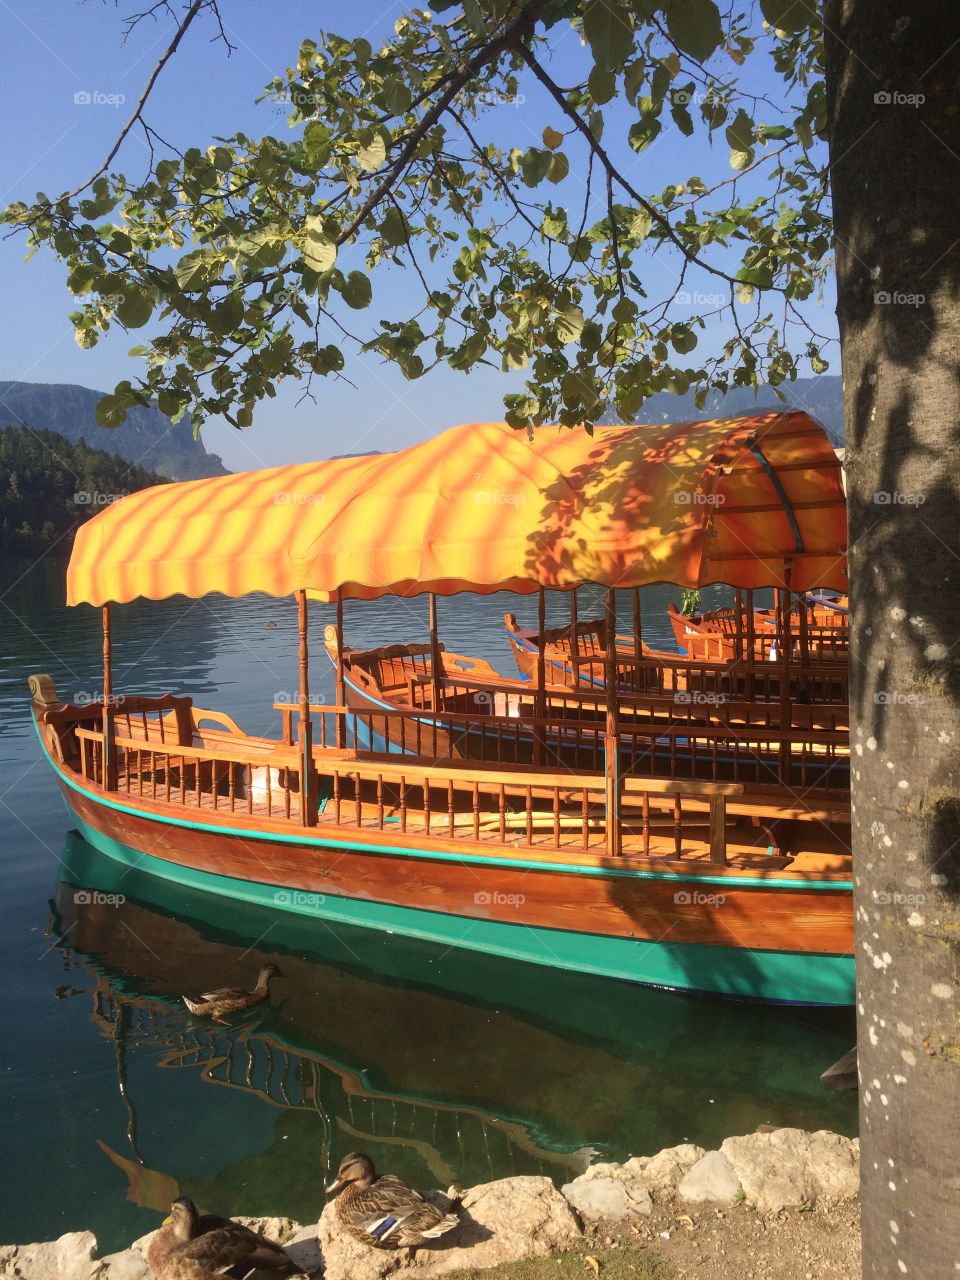 Pletna boats on Lake Bled, Slovenia 